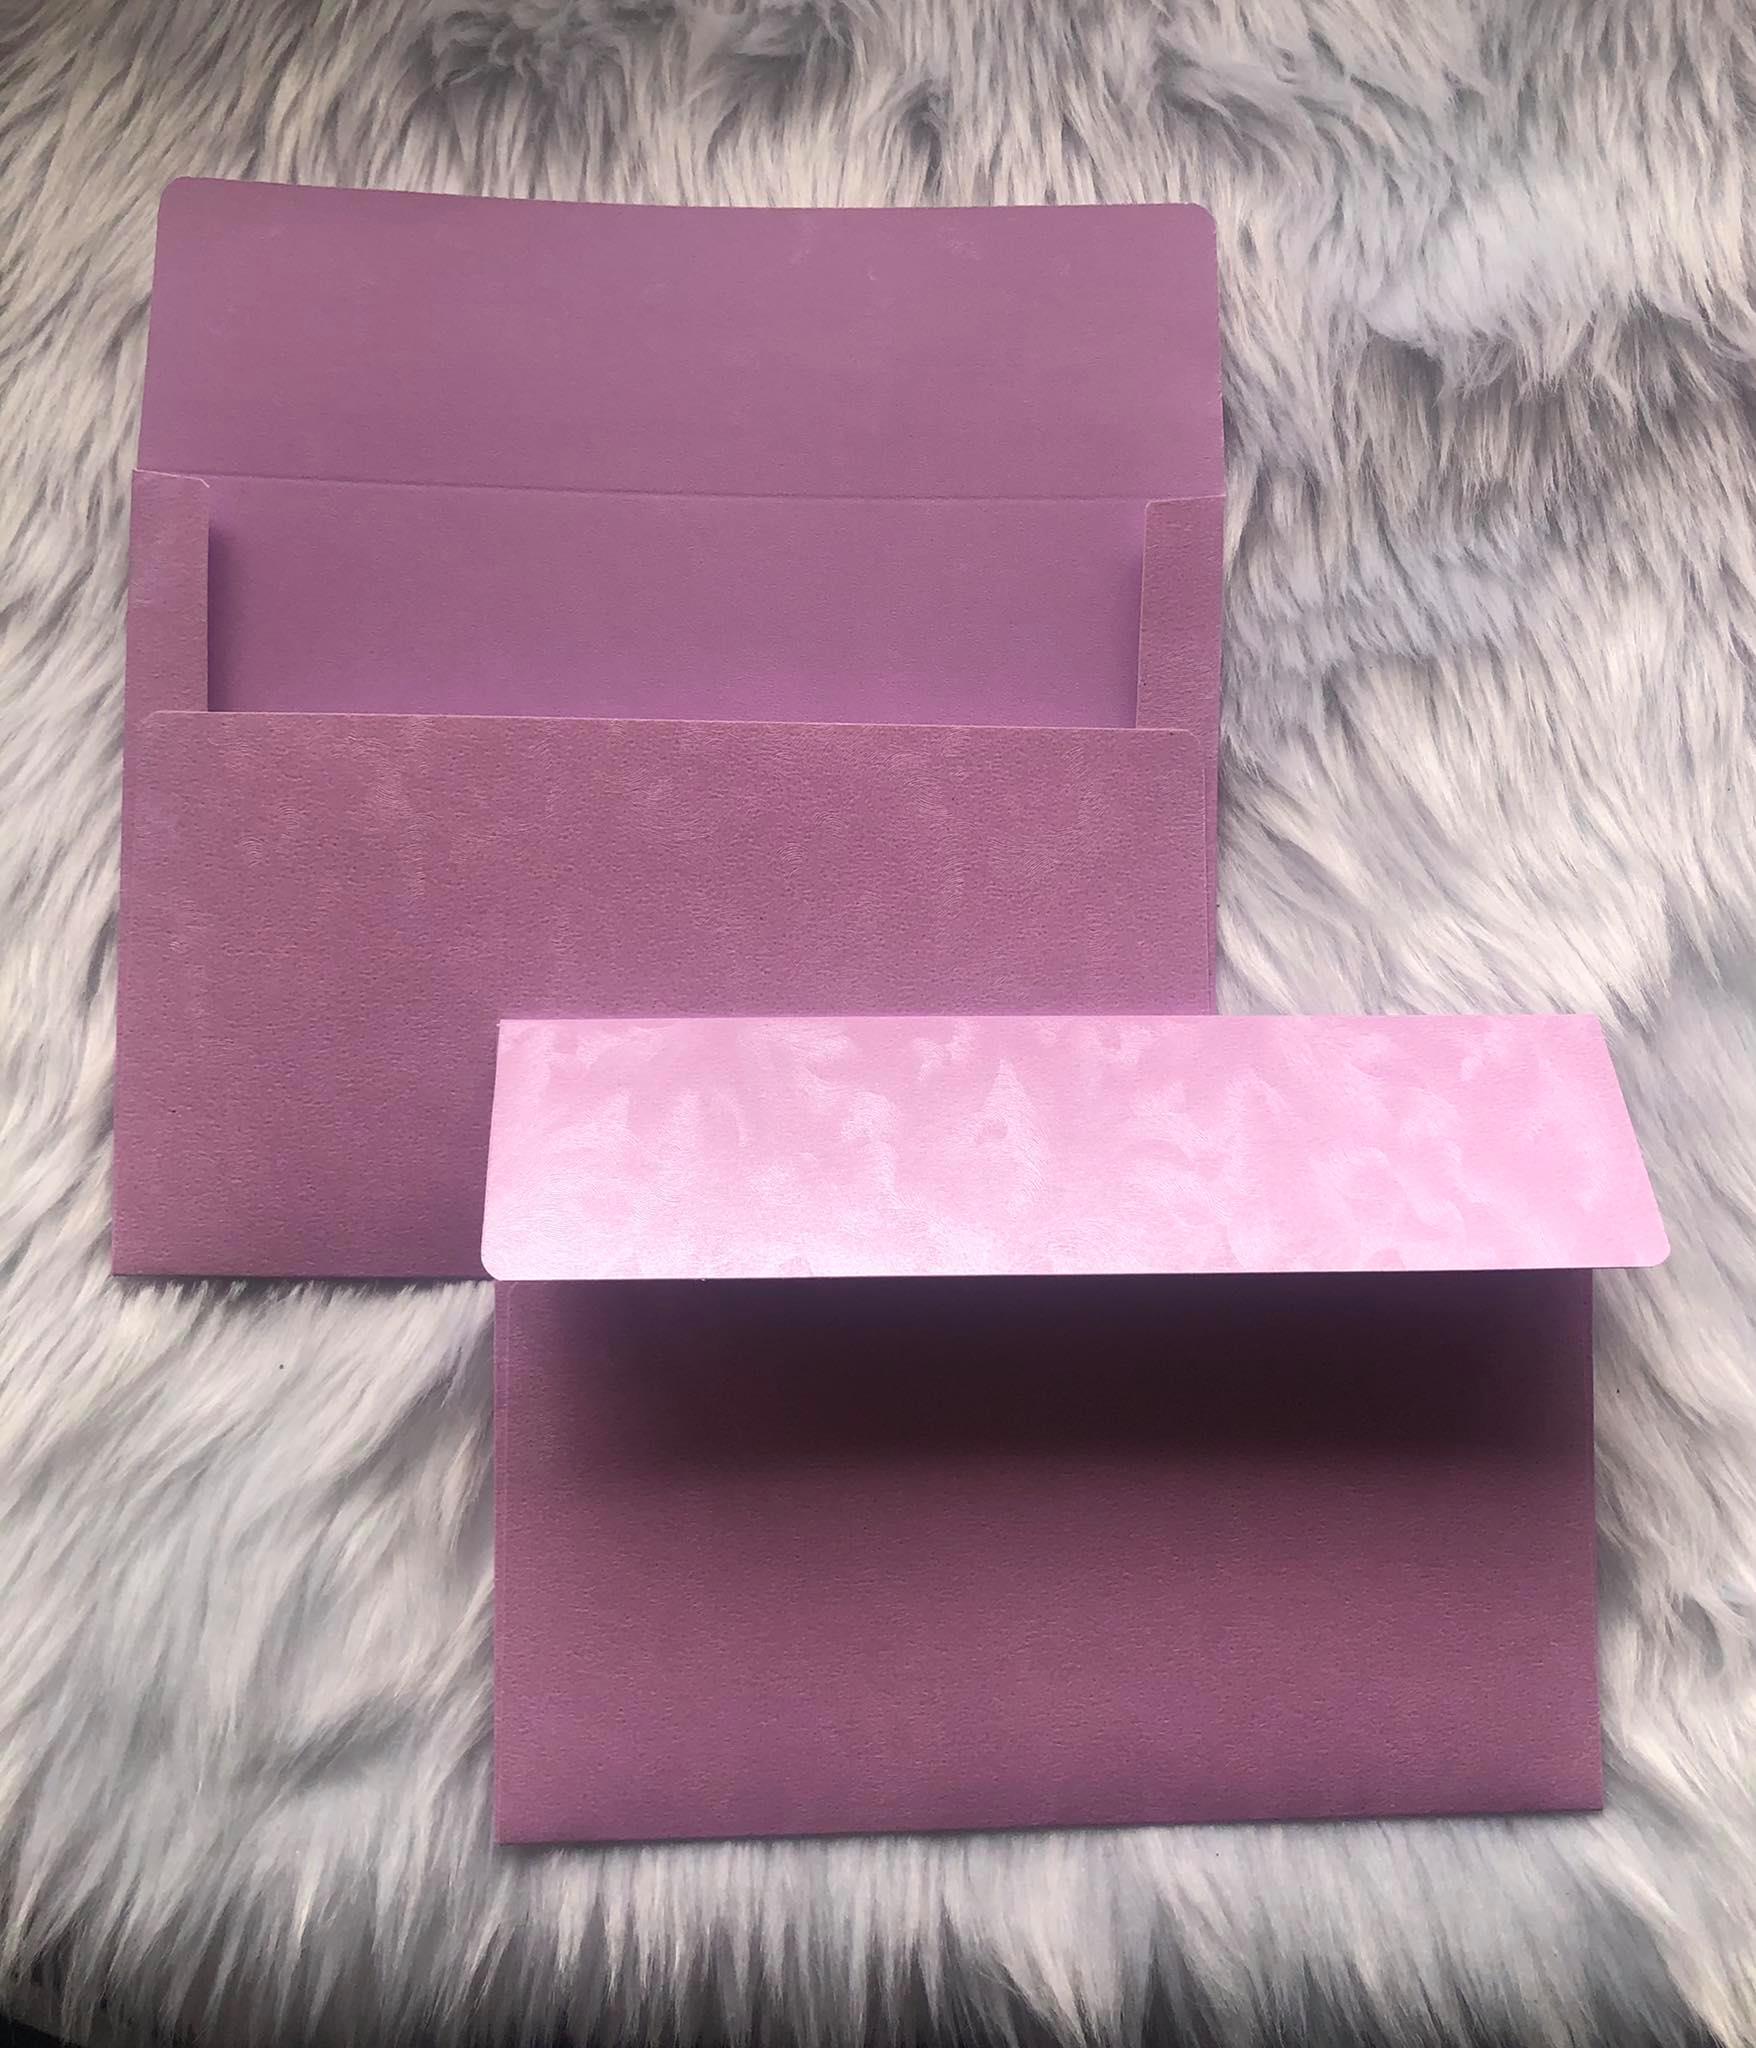 10pcs per pack wedding envelopes 5x7 5R